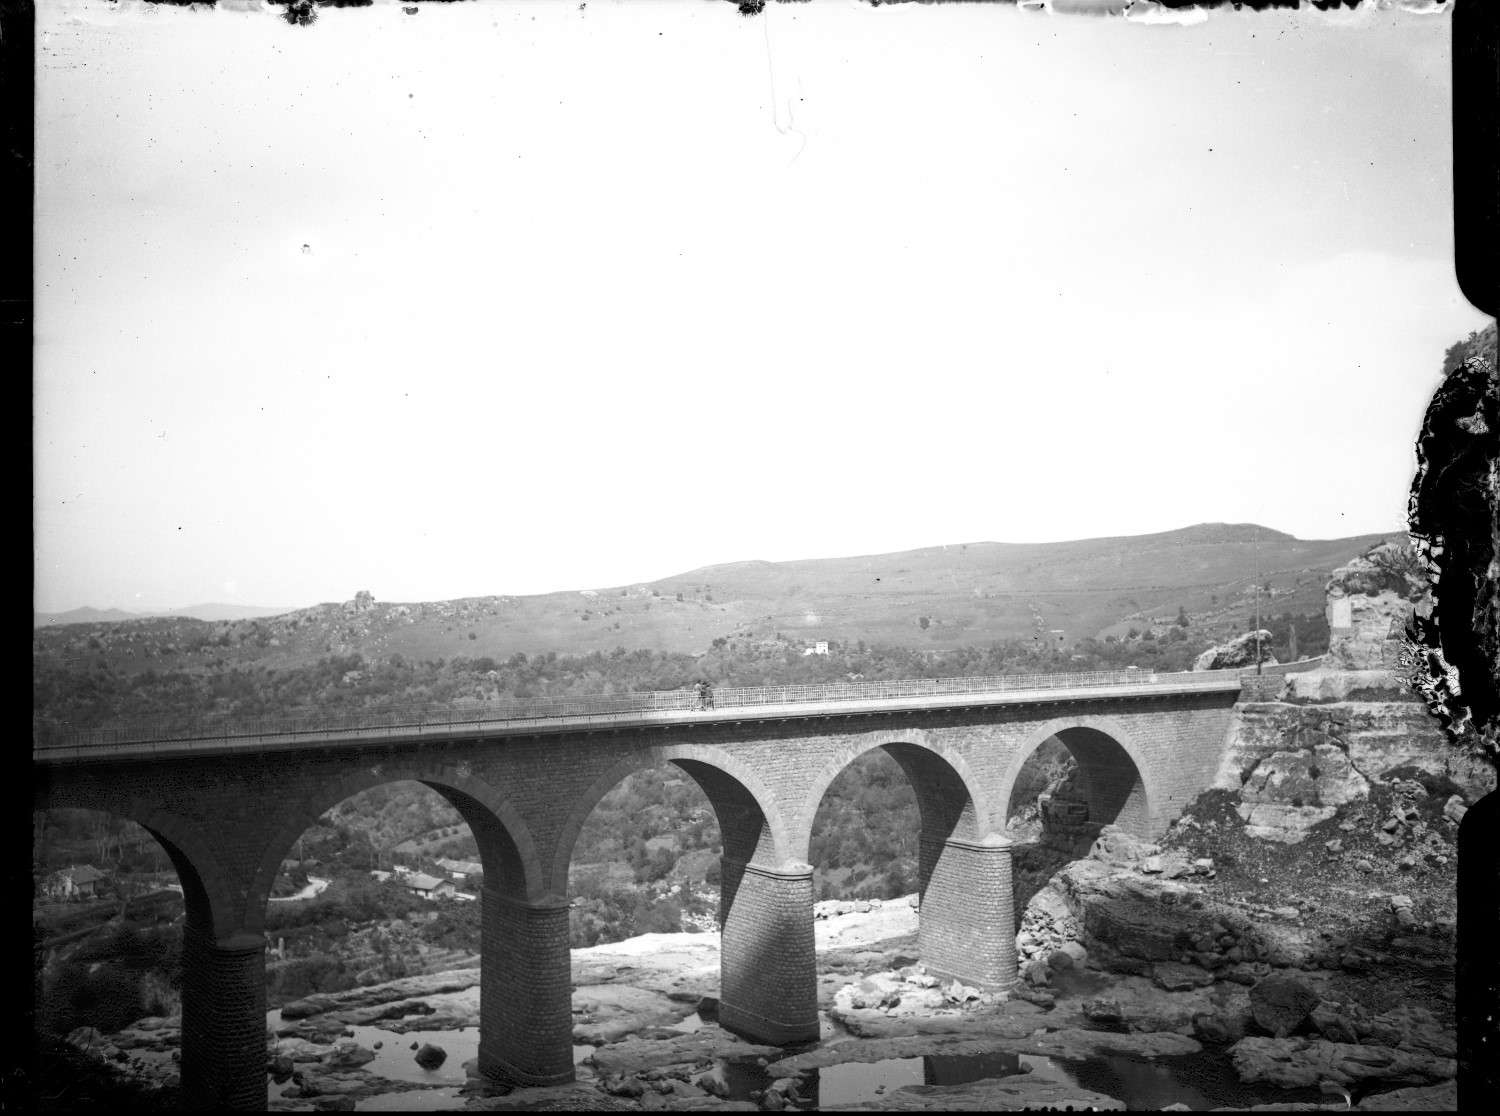 Aqueduct style bridge in mountains 